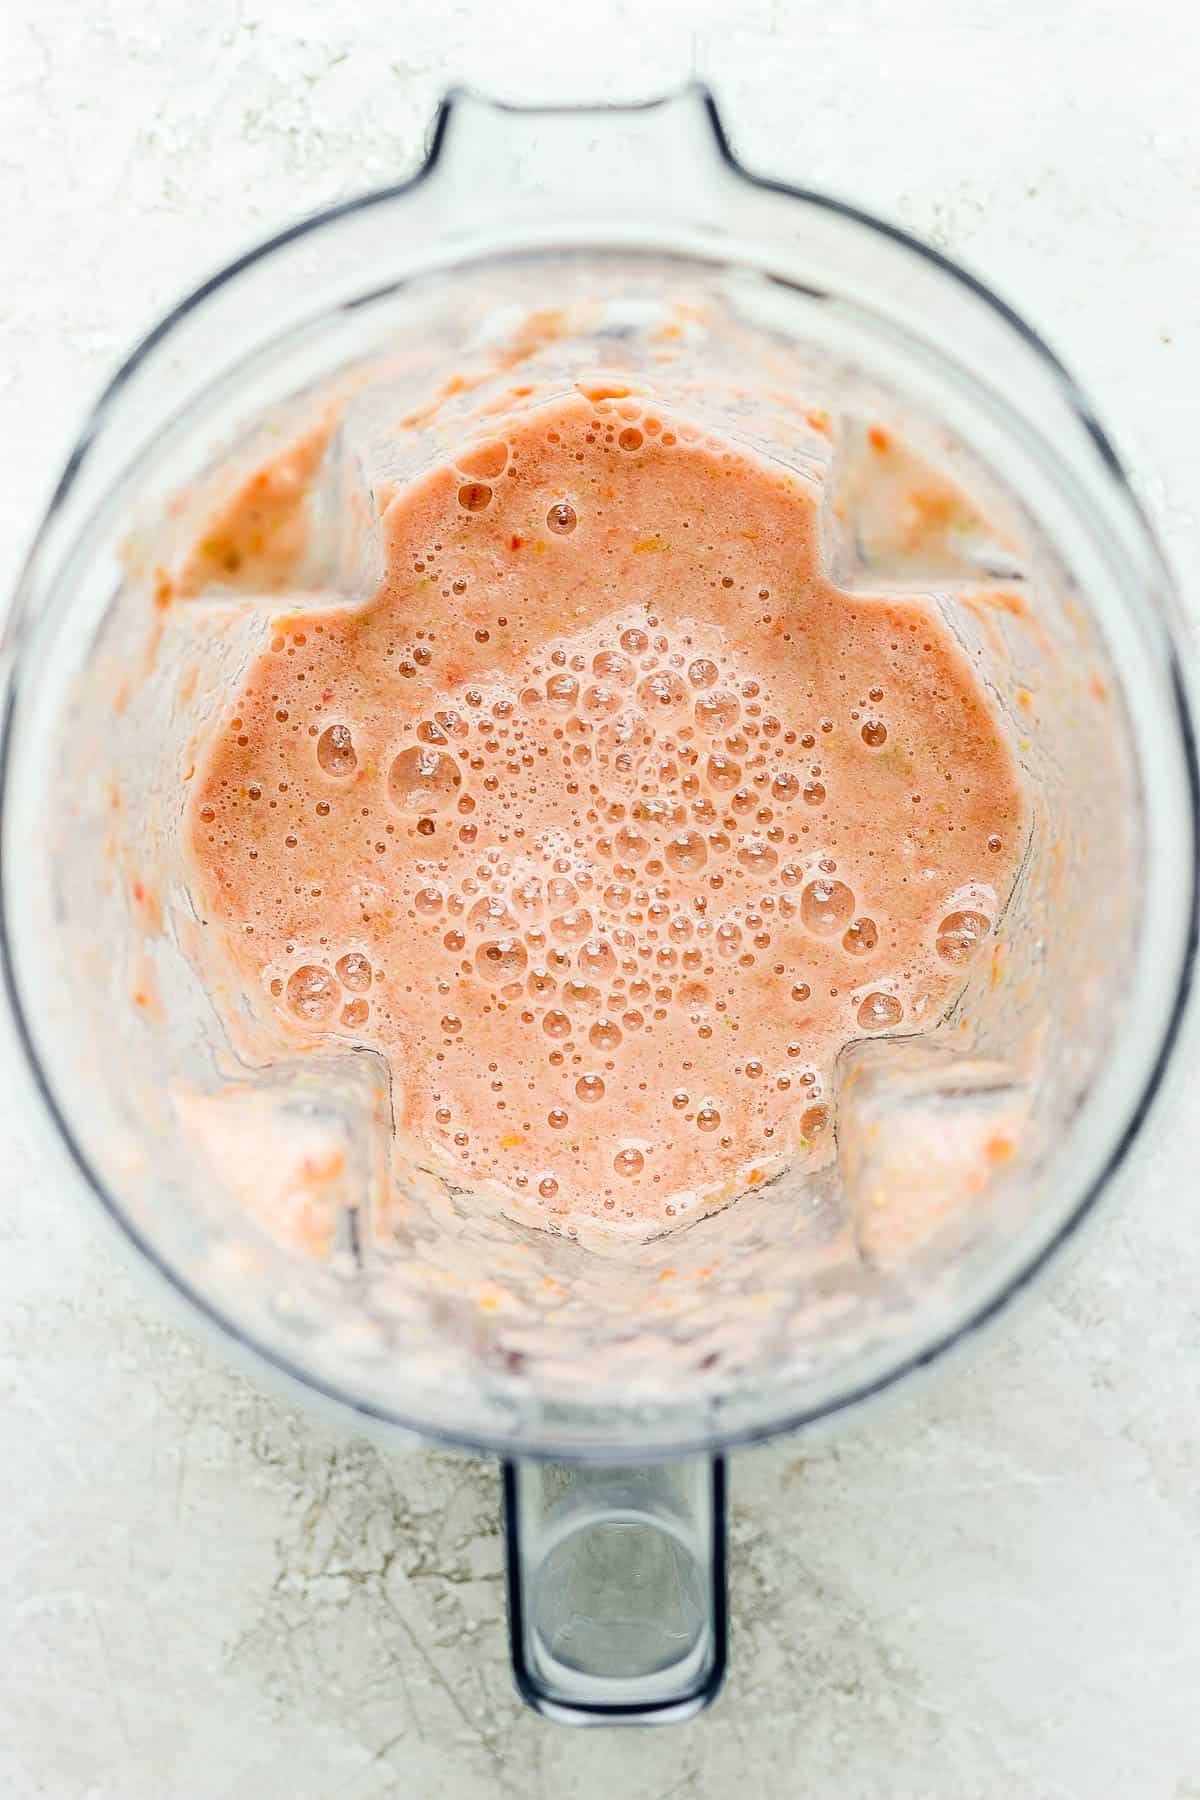 Blended tomato sauce in a blender for picadillo.